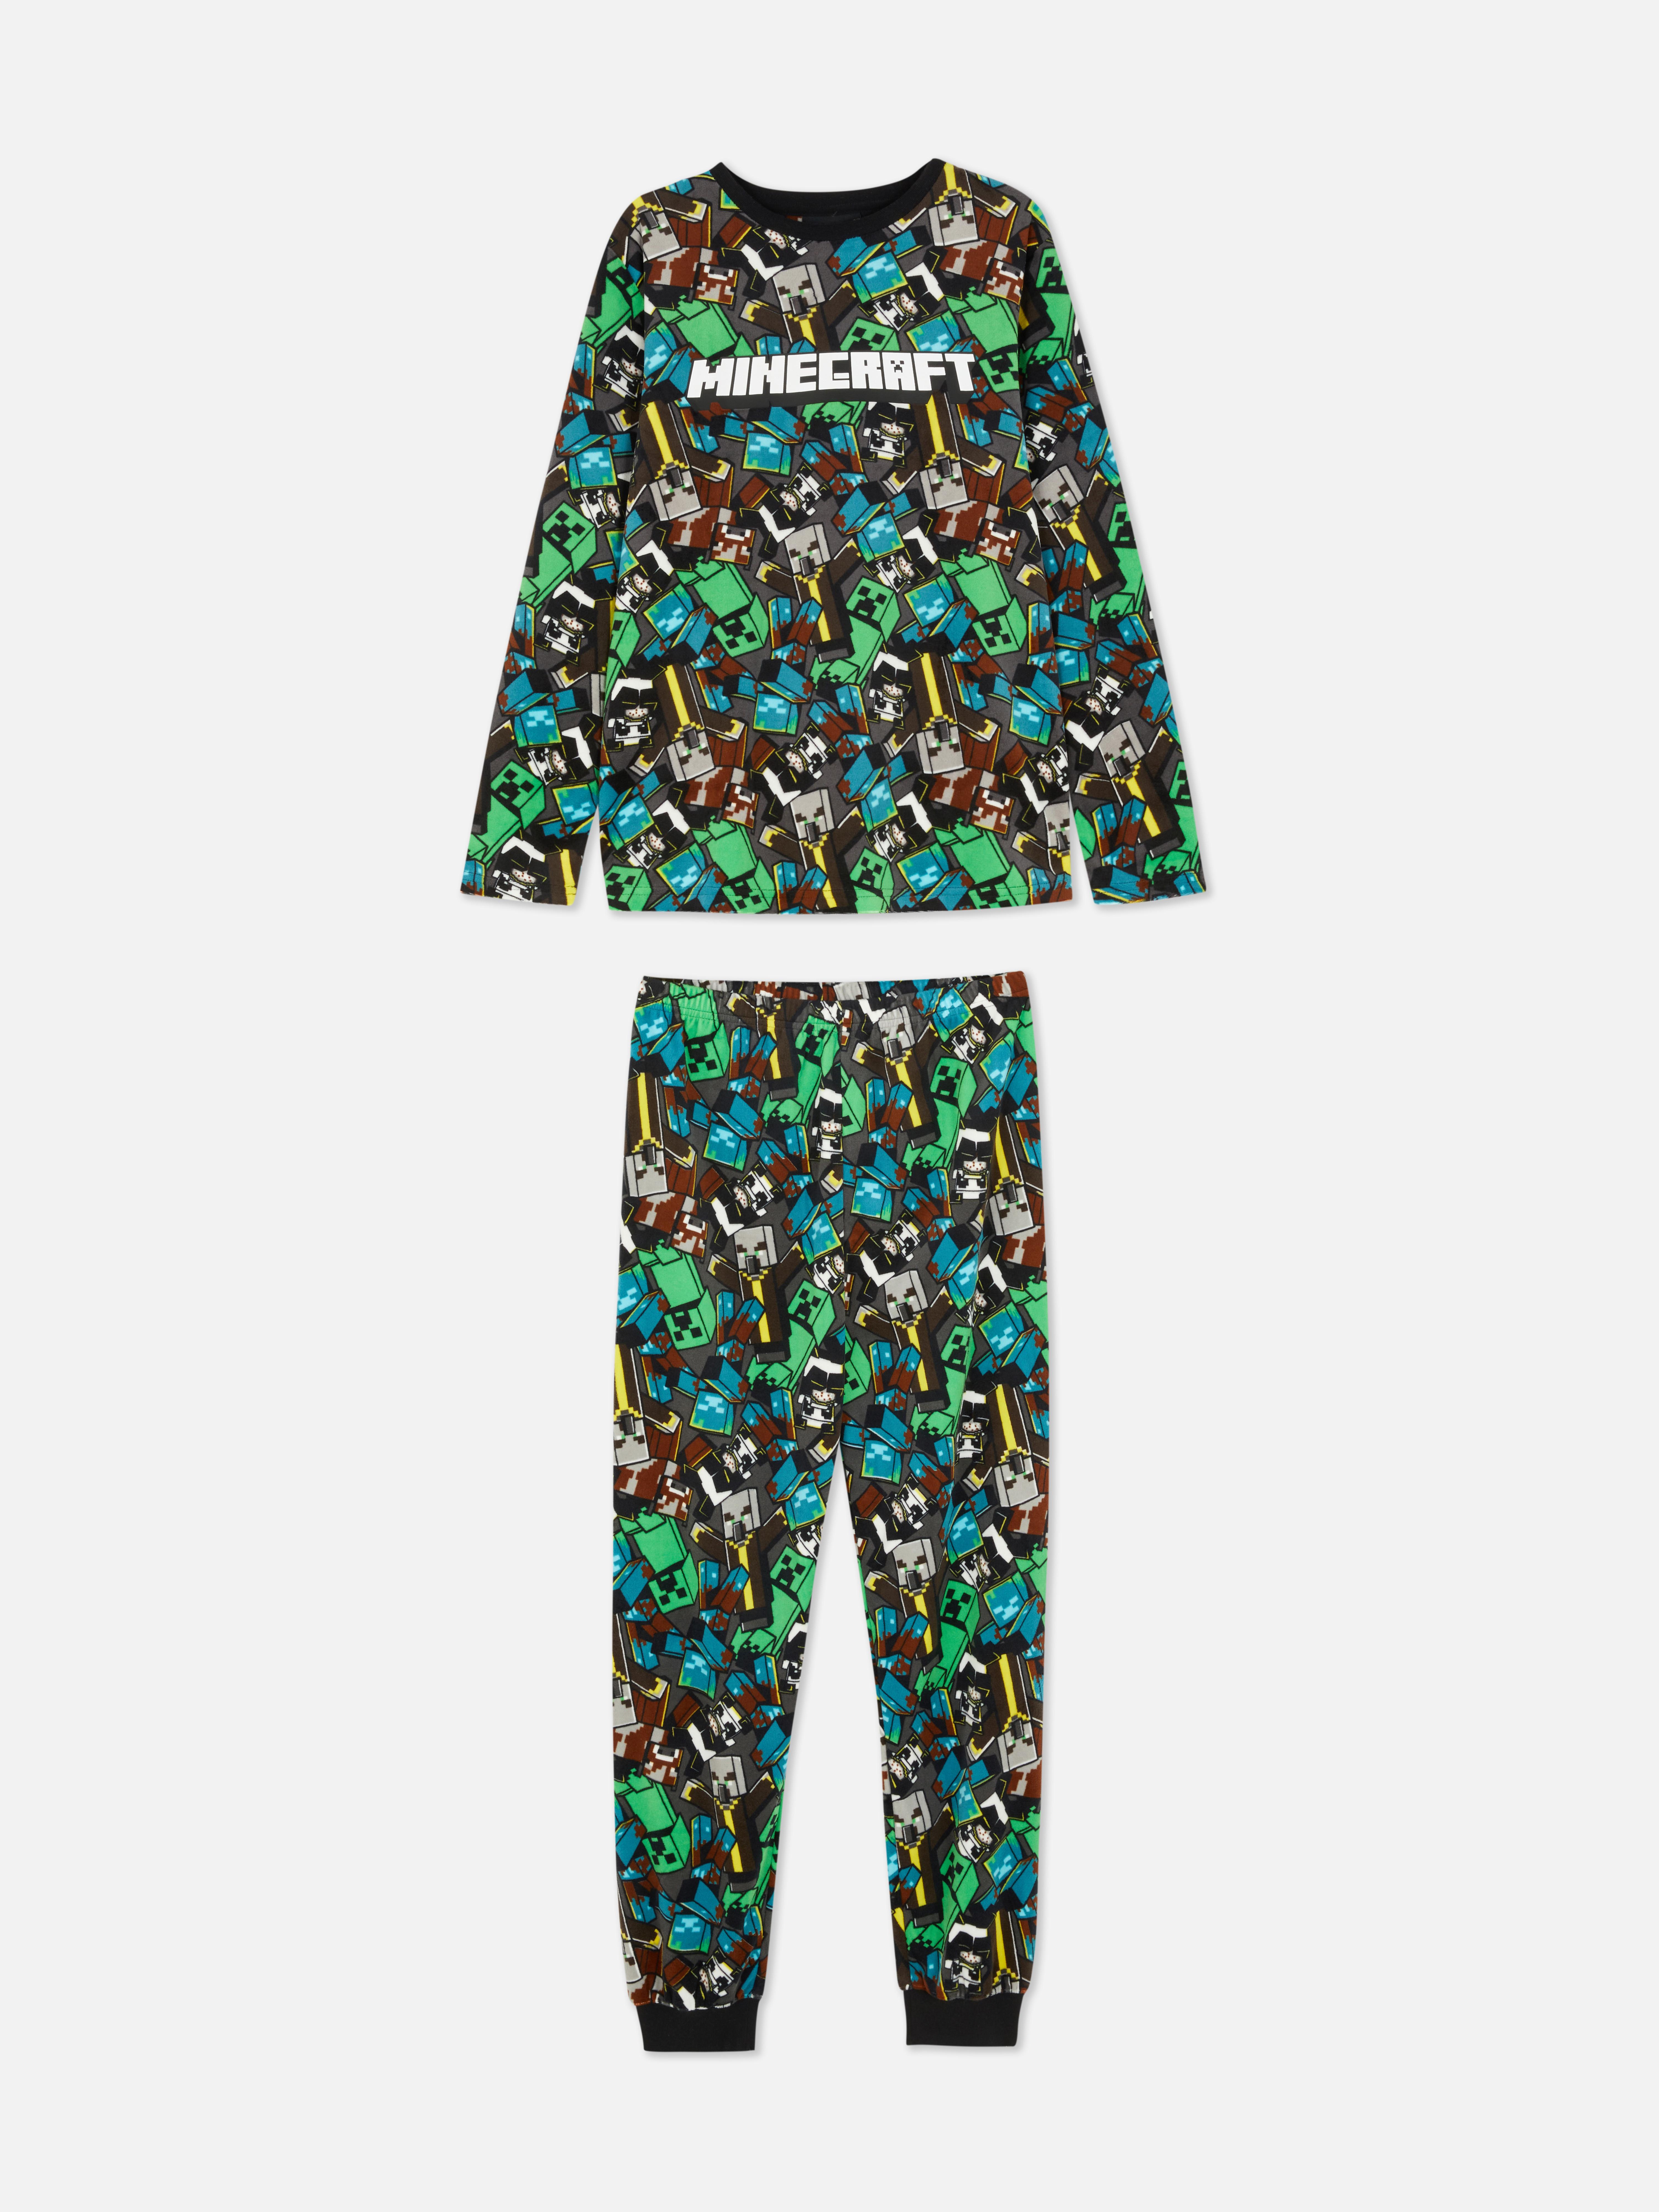 Minecraft Shirt and Joggers Pyjamas